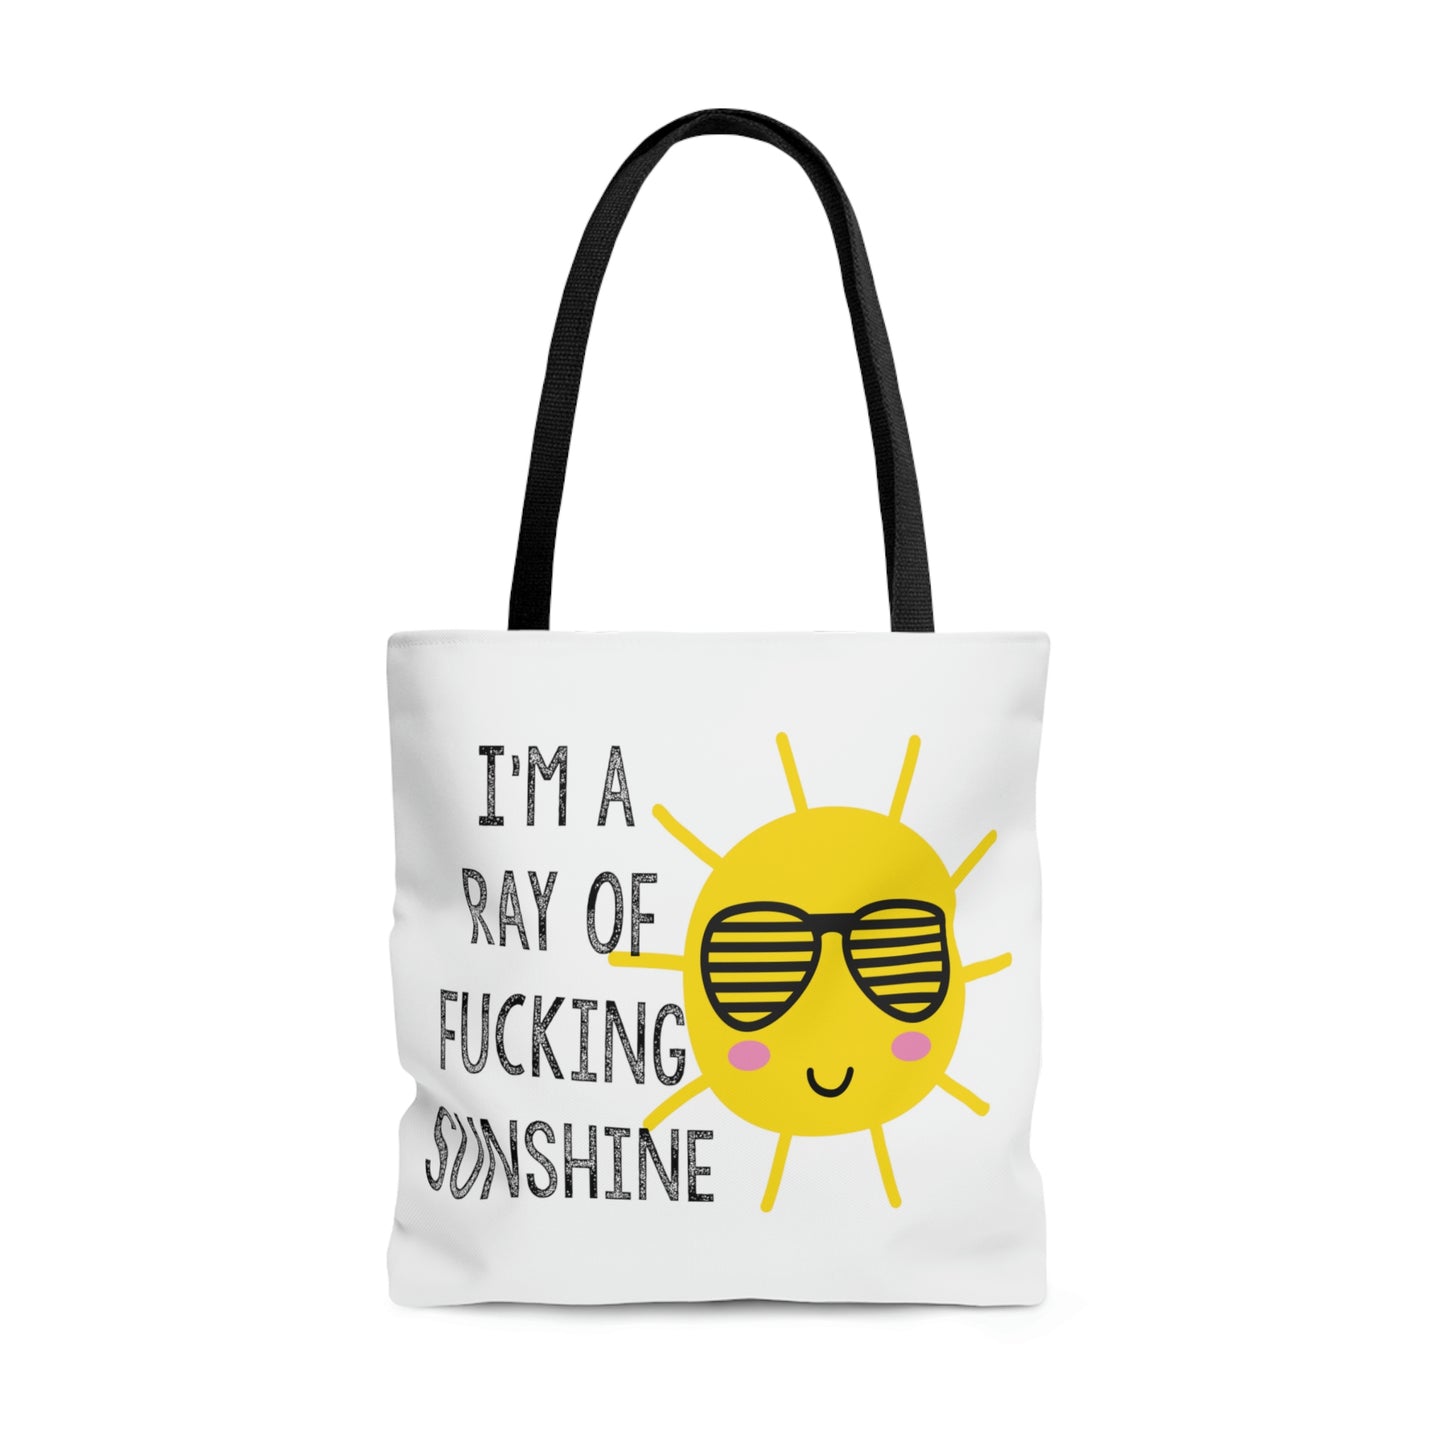 I'm A Ray Of Fucking Sunshine Tote Bag